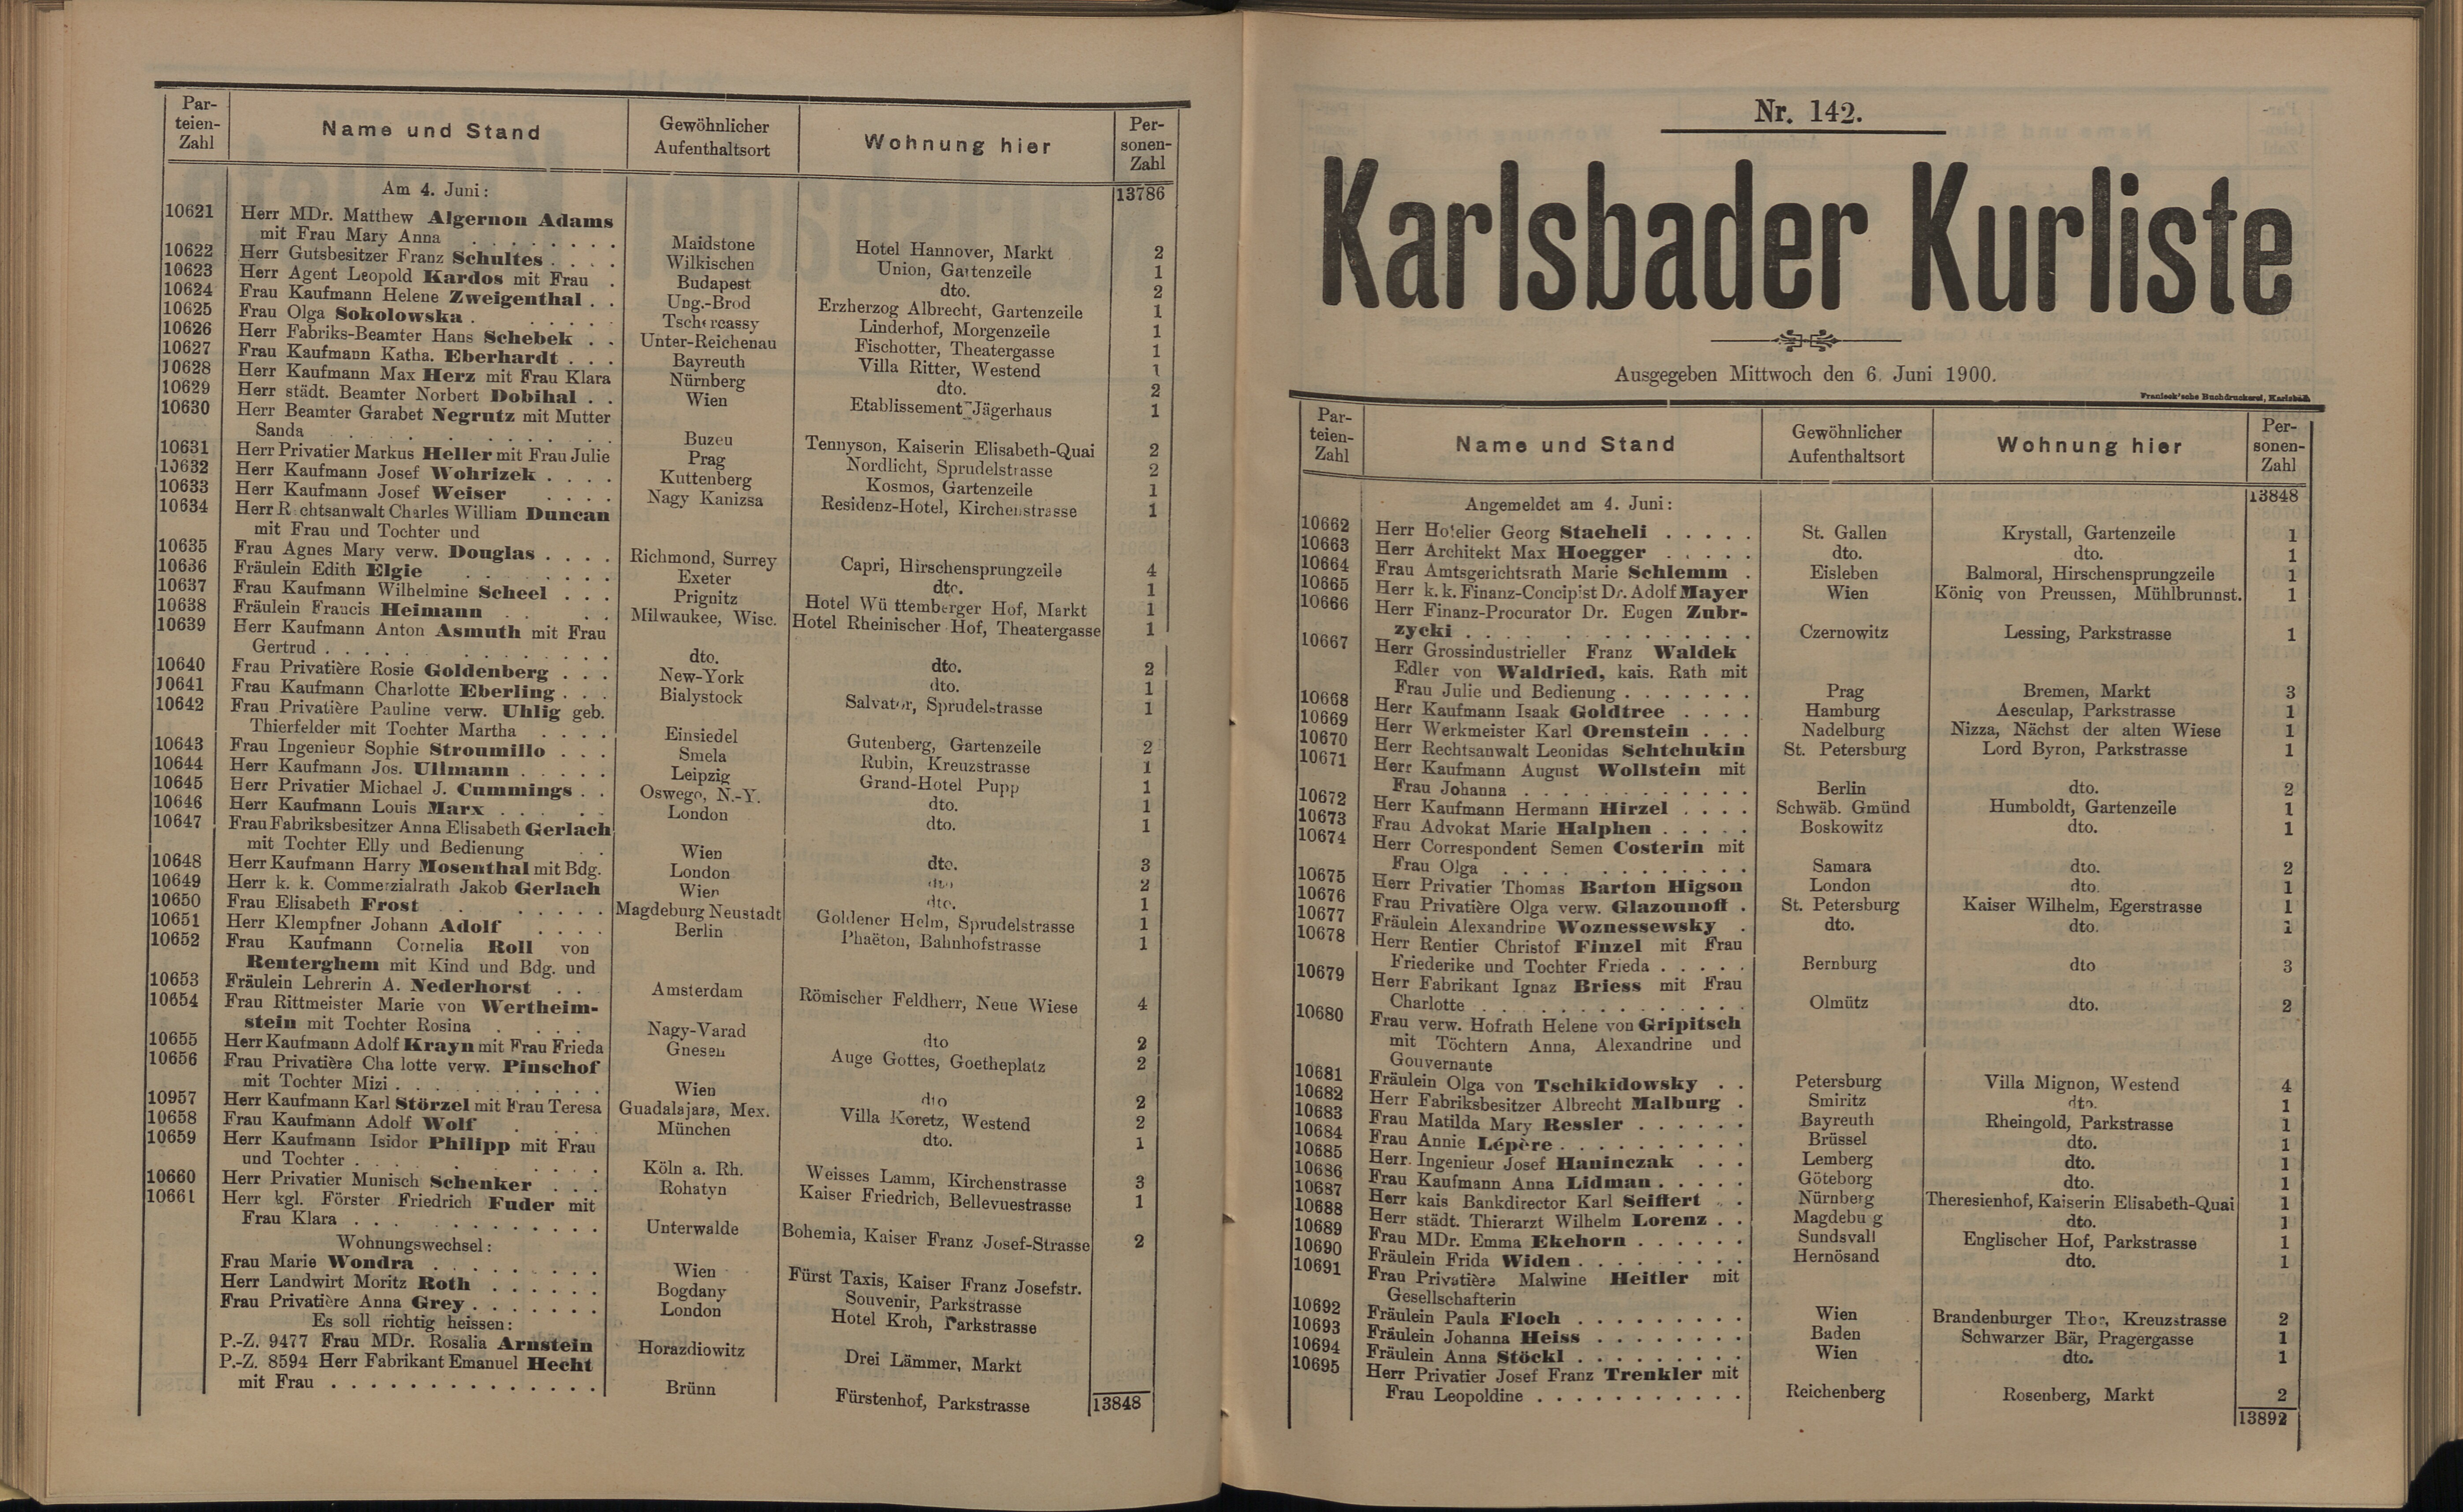 162. soap-kv_knihovna_karlsbader-kurliste-1900_1630